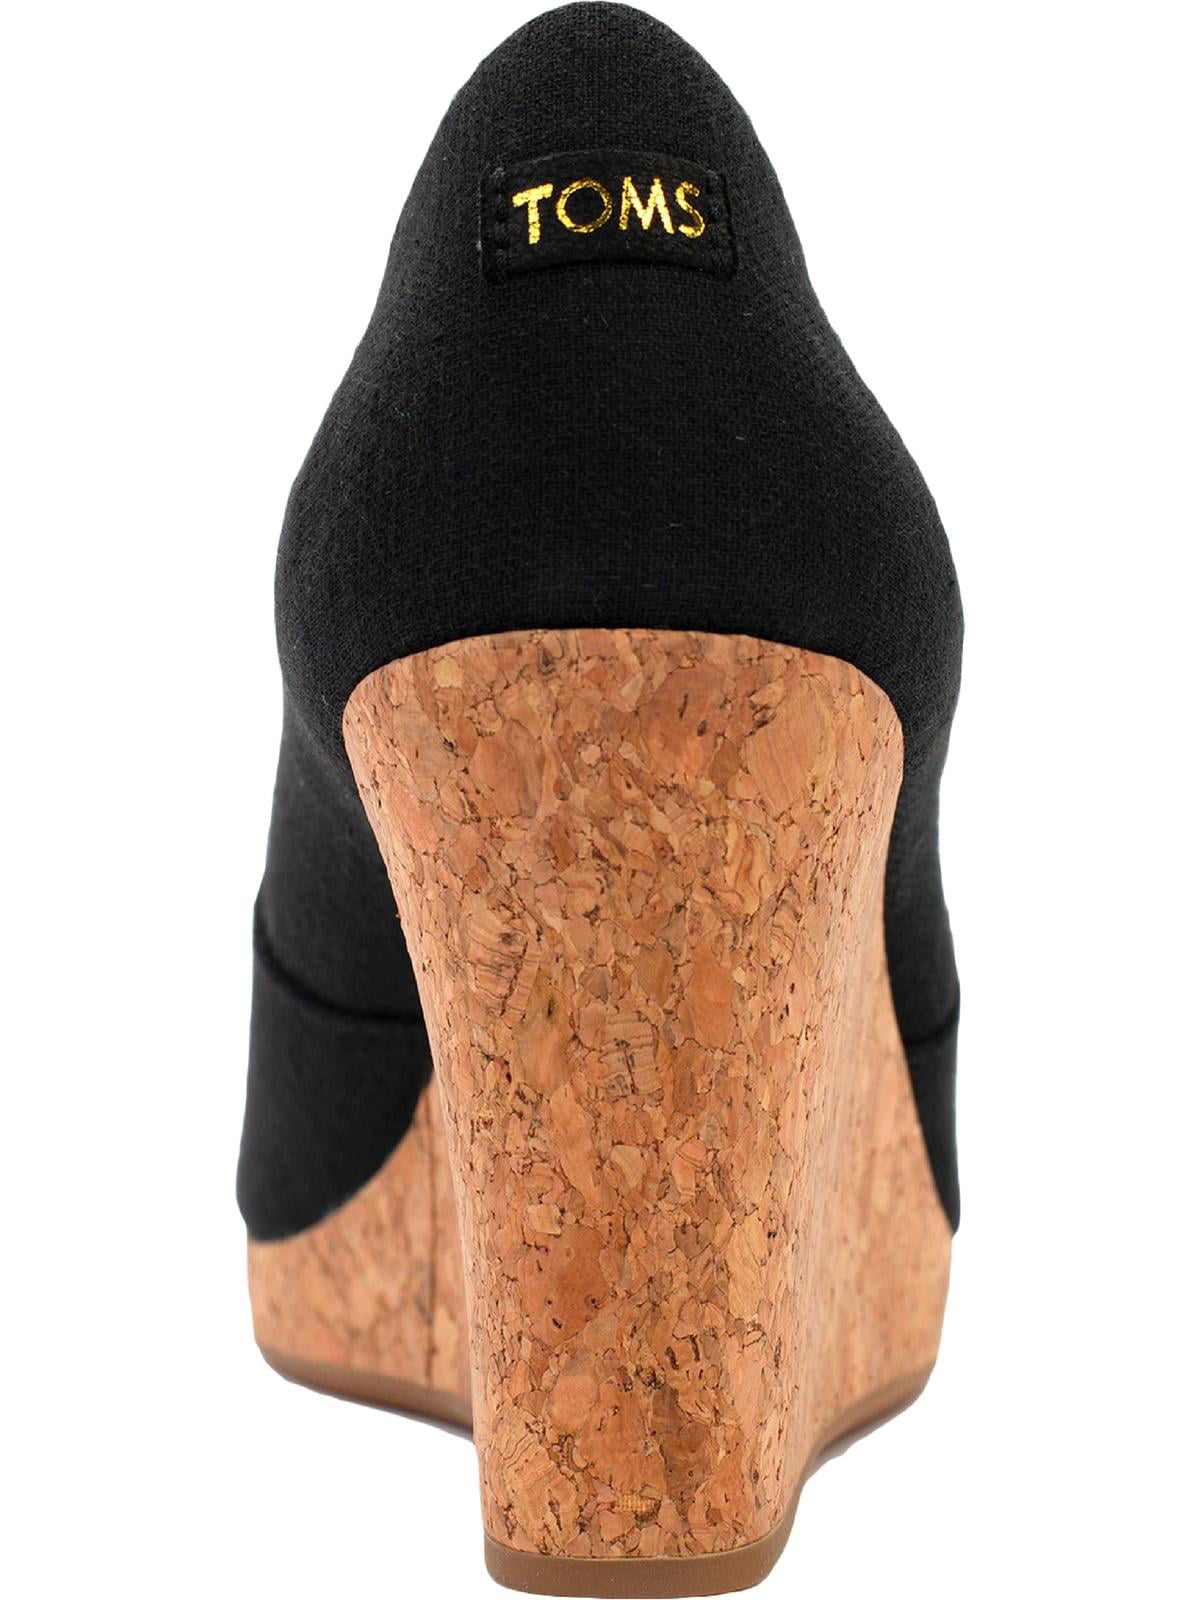 Toms Women's Black Twill Classic Wedge Sandals Cork Heel Peep Toe Shoes  Size 7 | eBay